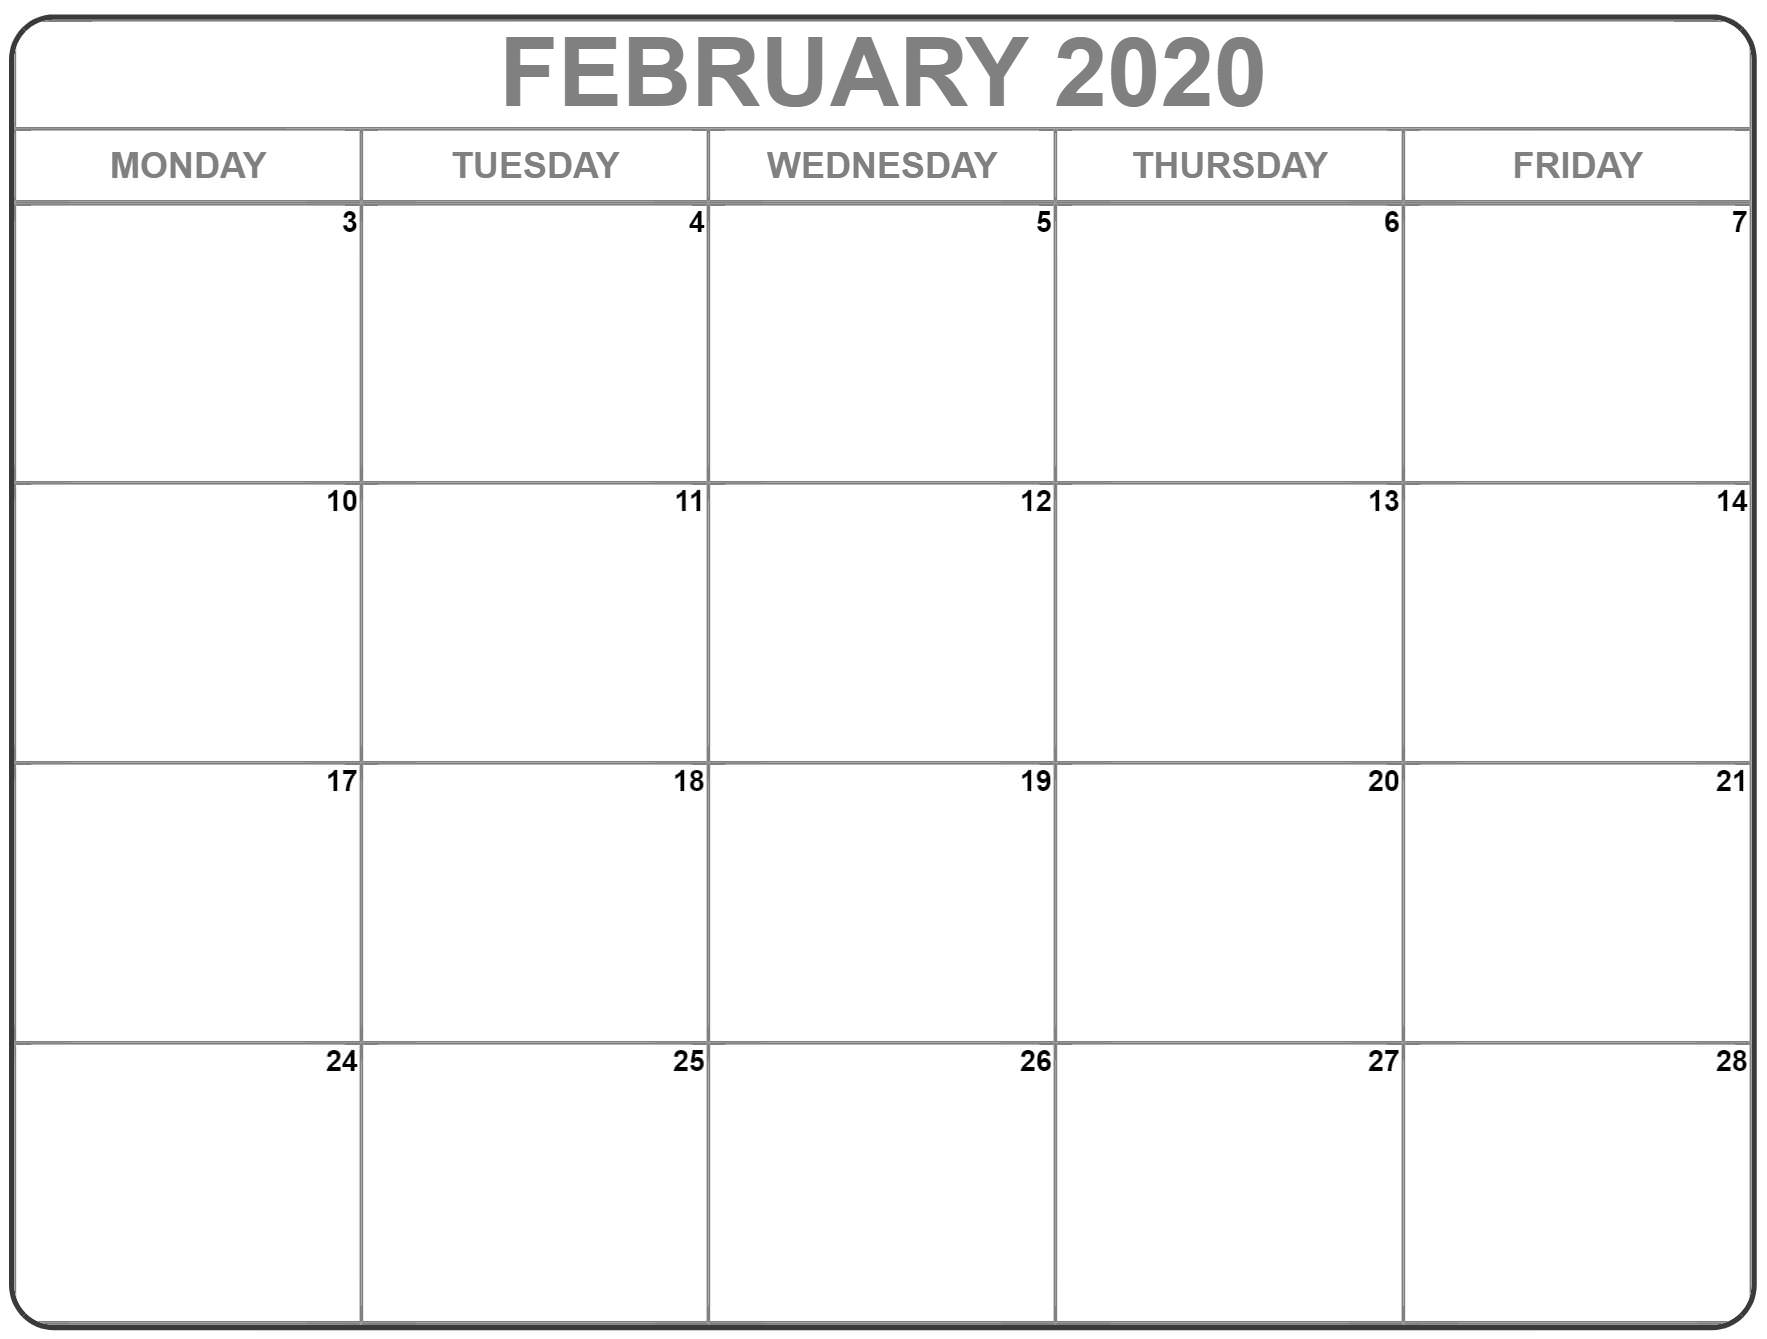 February 2020 Monday Calendar | Monday To Sunday within Monday Through Friday Calendar